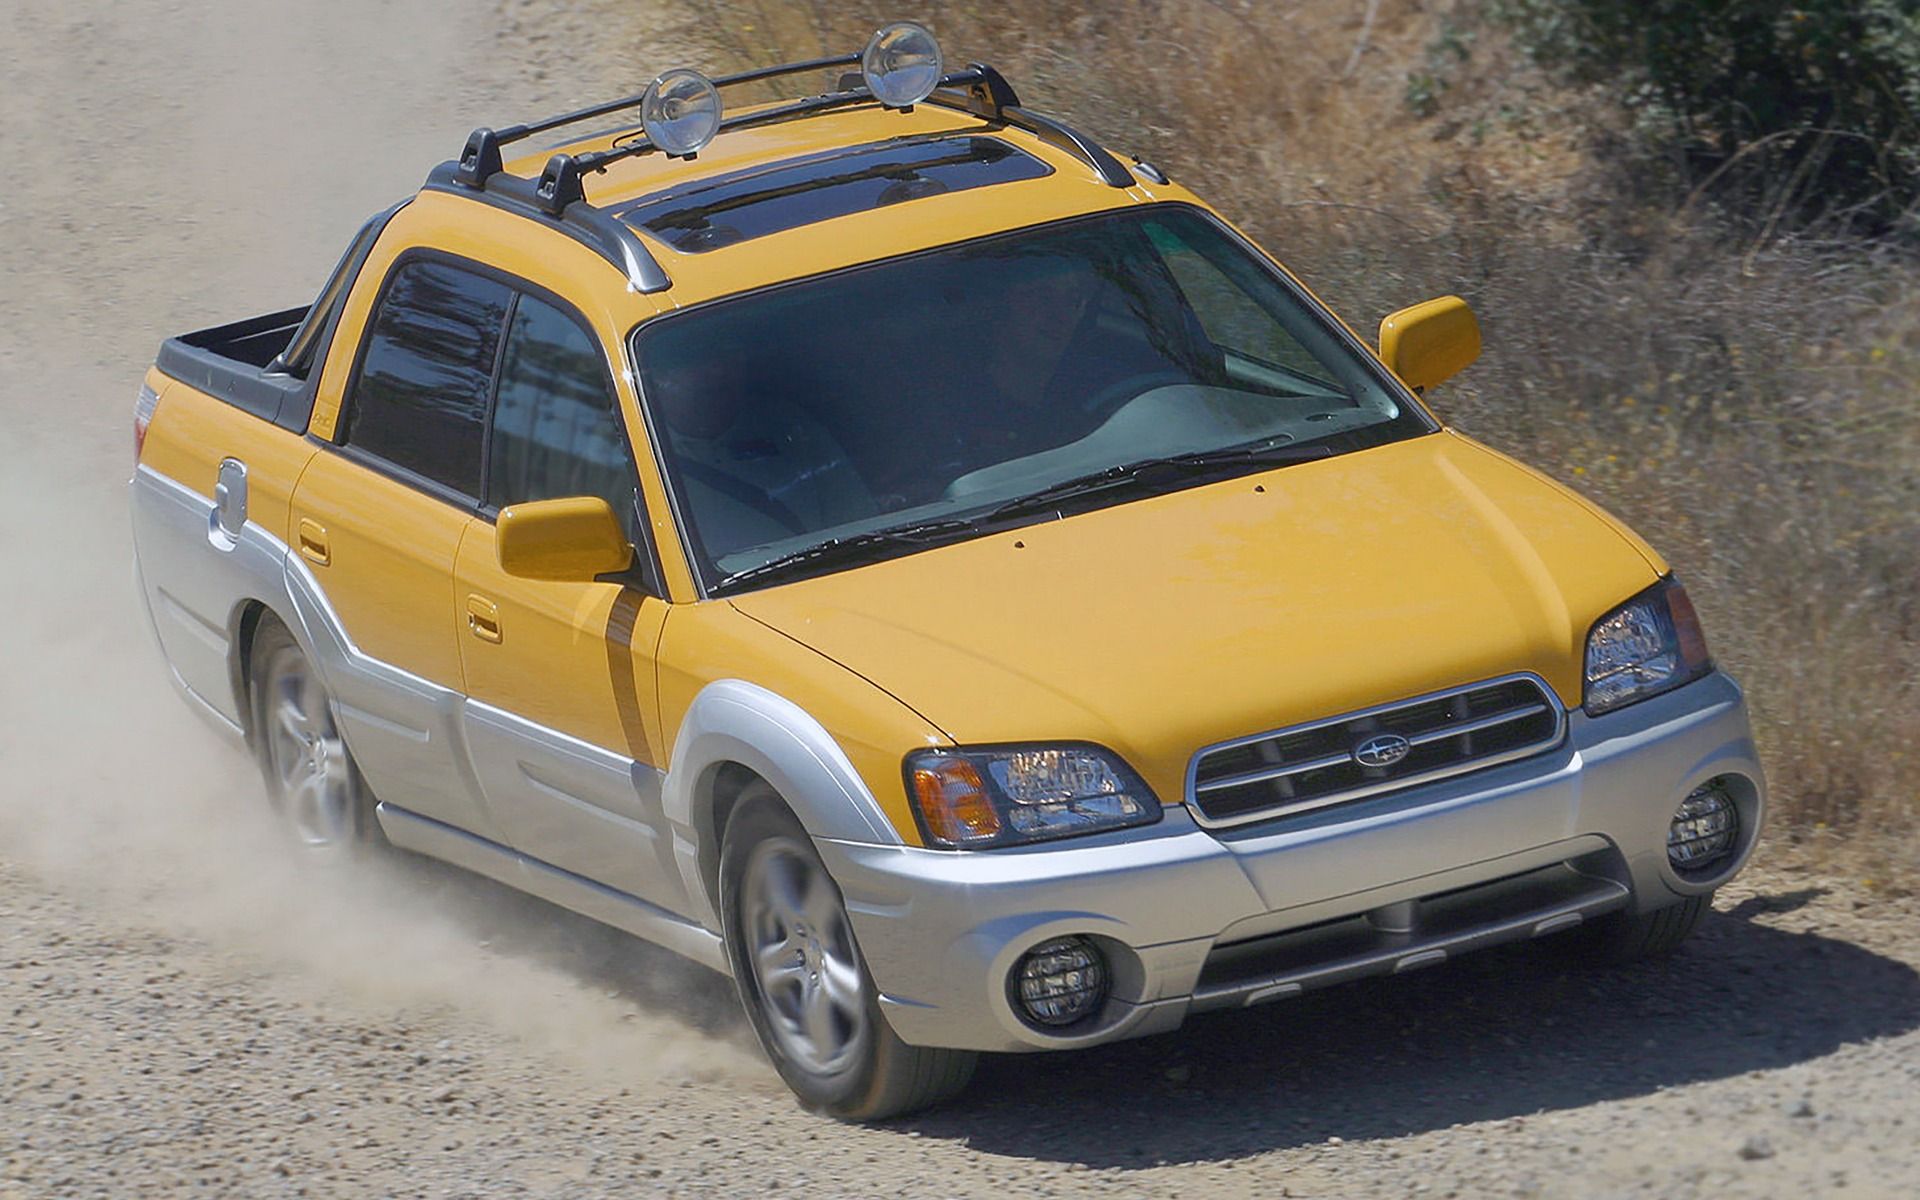 Subaru Baja yellow truck driving on dirt road